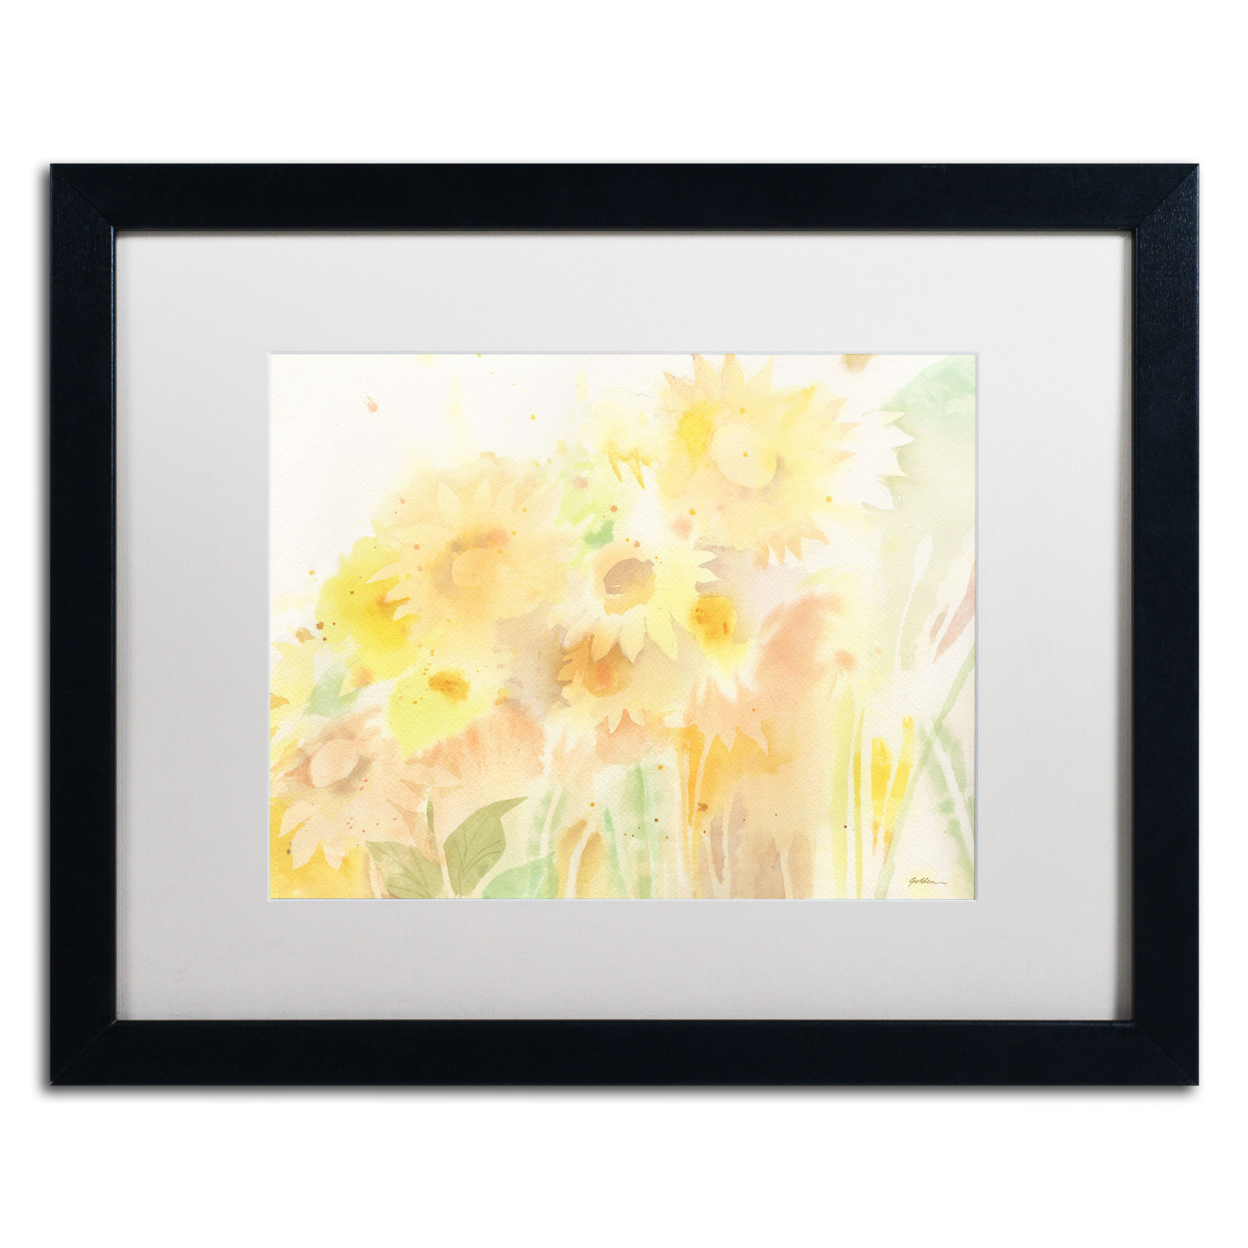 Sheila Golden 'Amid Sunflowers' Black Wooden Framed Art 18 X 22 Inches